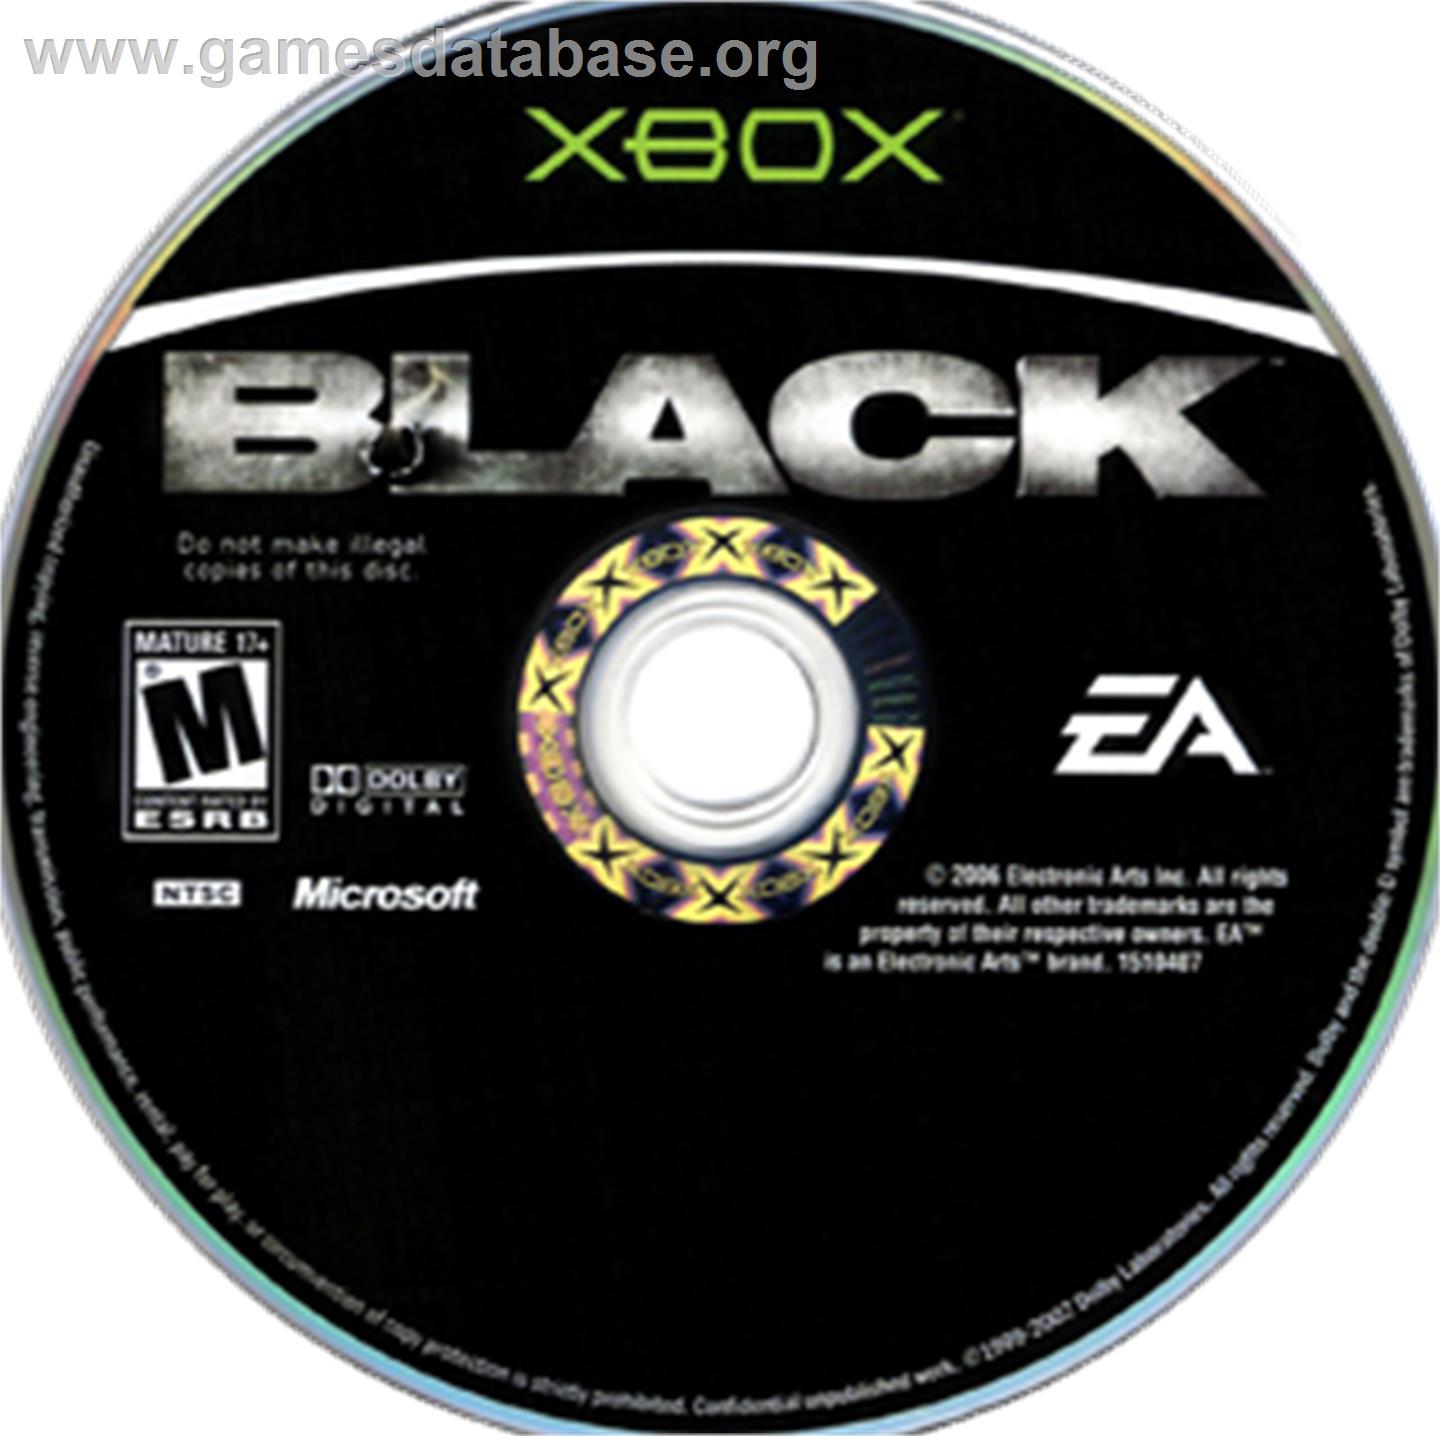 Black - Microsoft Xbox - Artwork - CD